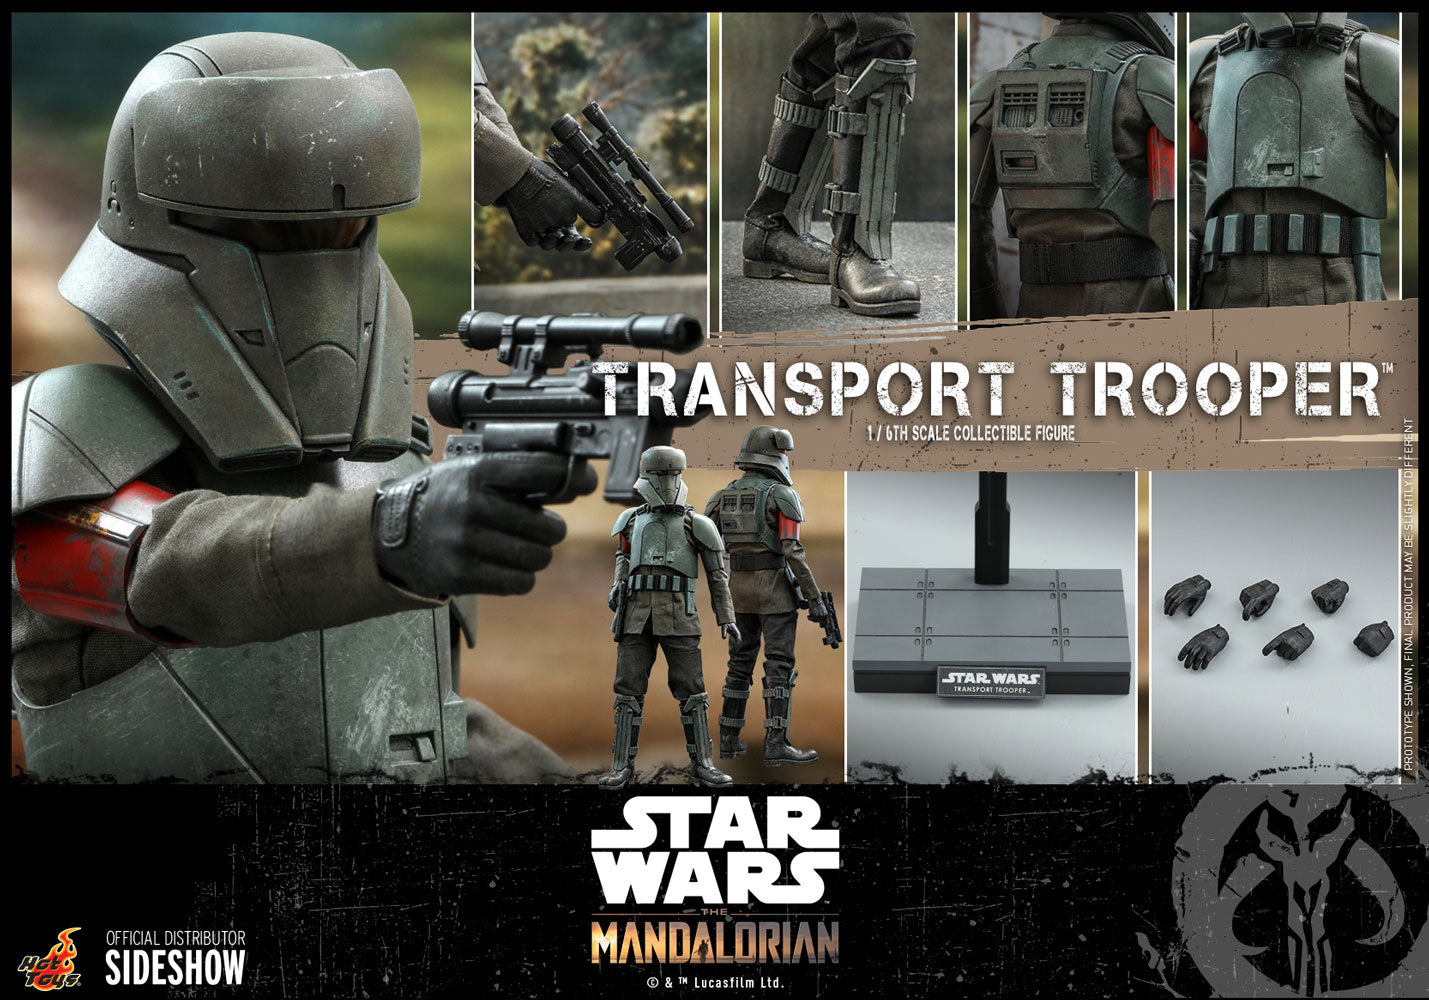 Transport Trooper Star Wars 1:6 Scale Figure Hot Toys